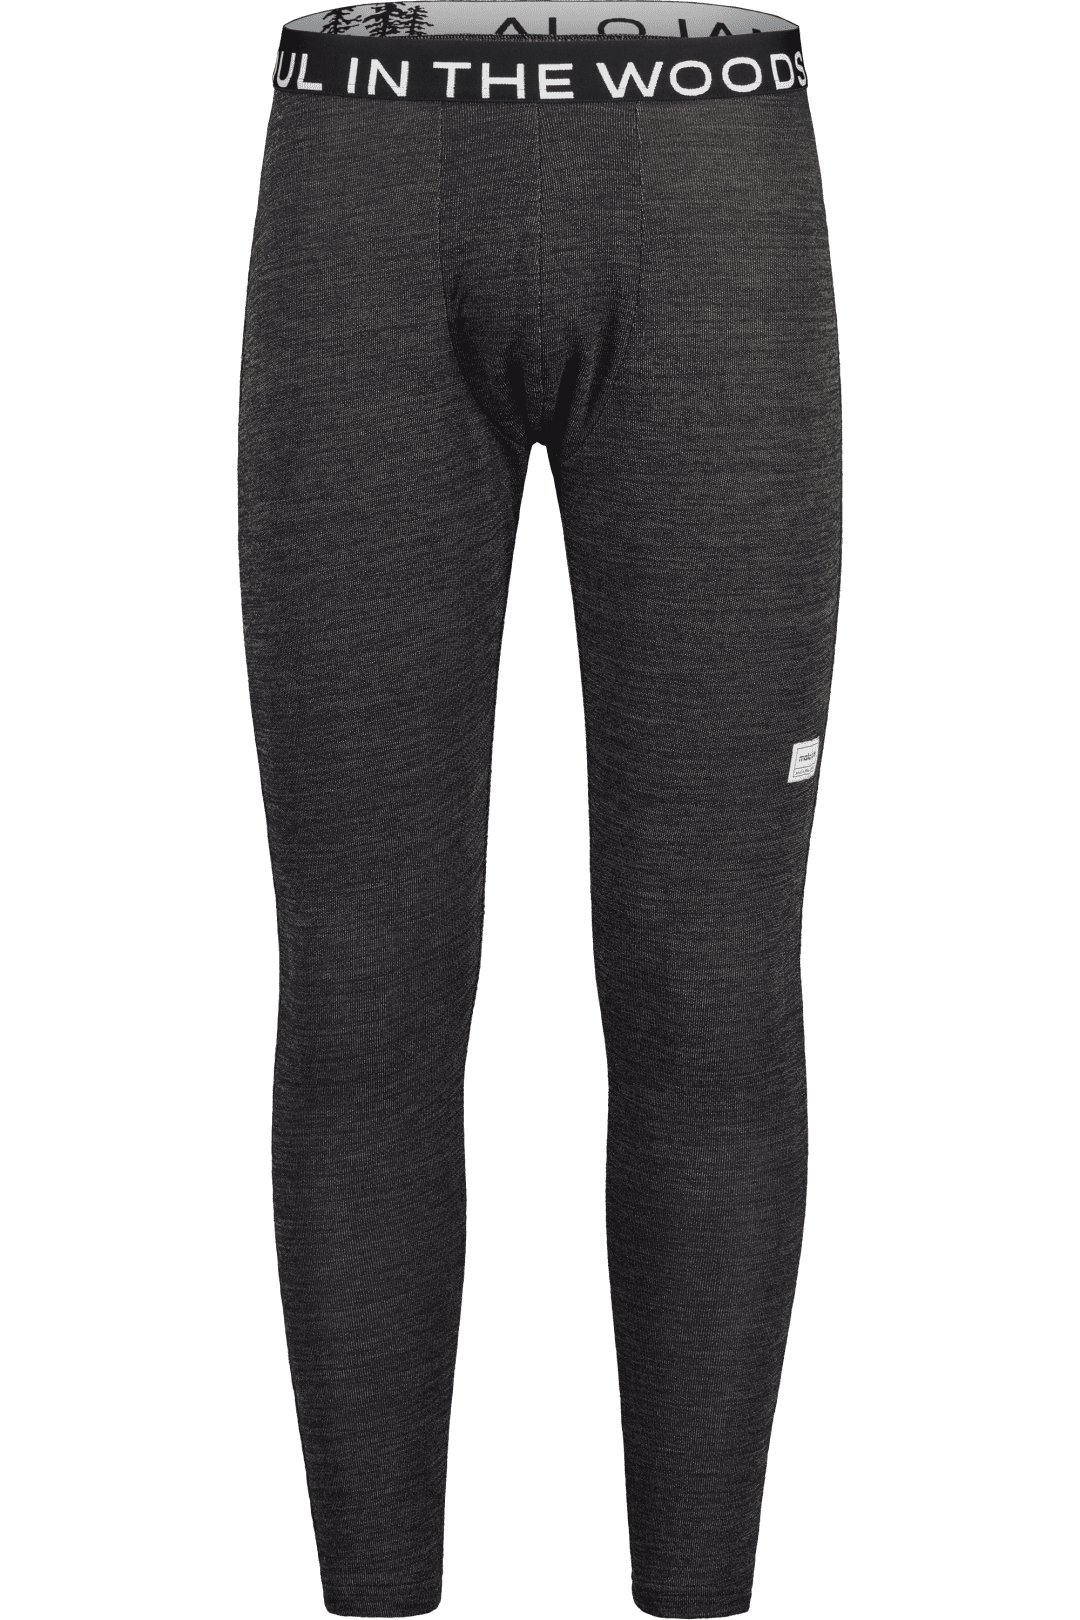 Man's Multisport Technical Underwear Pants